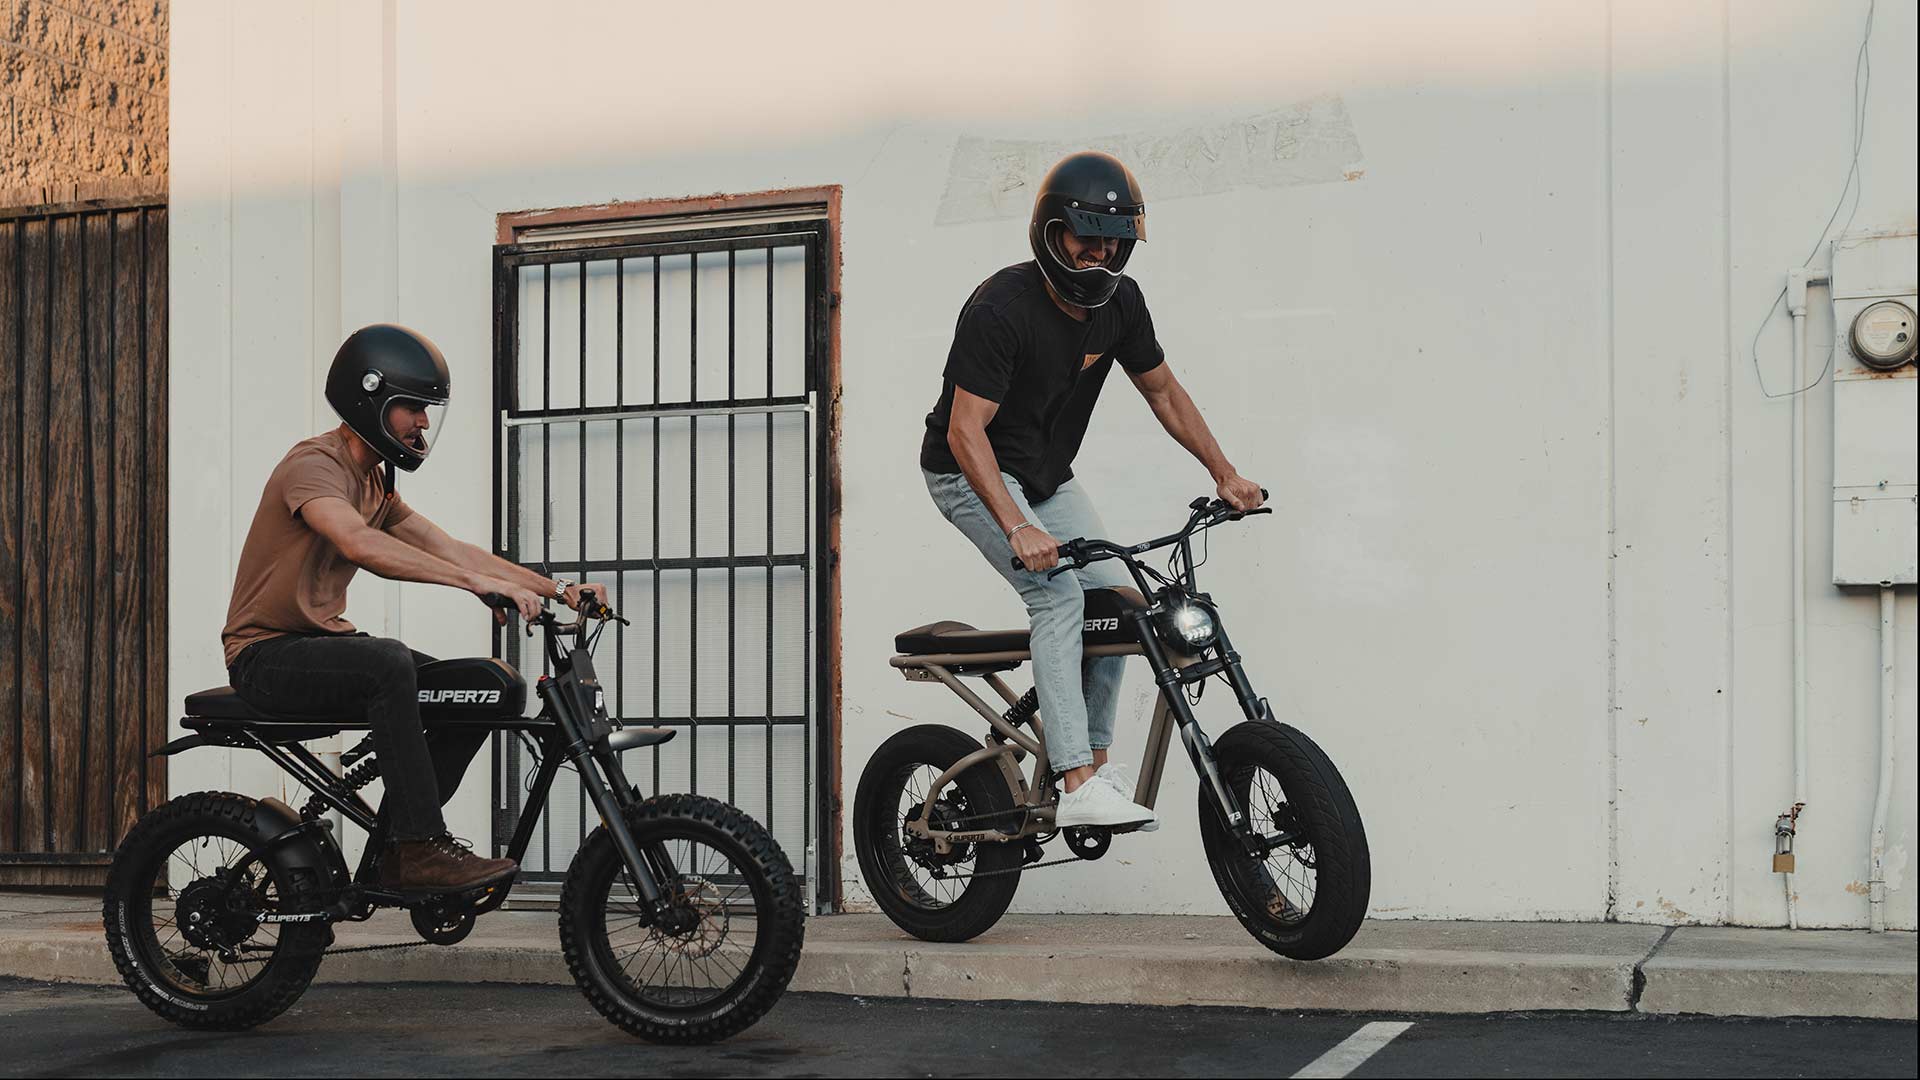 Two men riding Super73-RX bikes